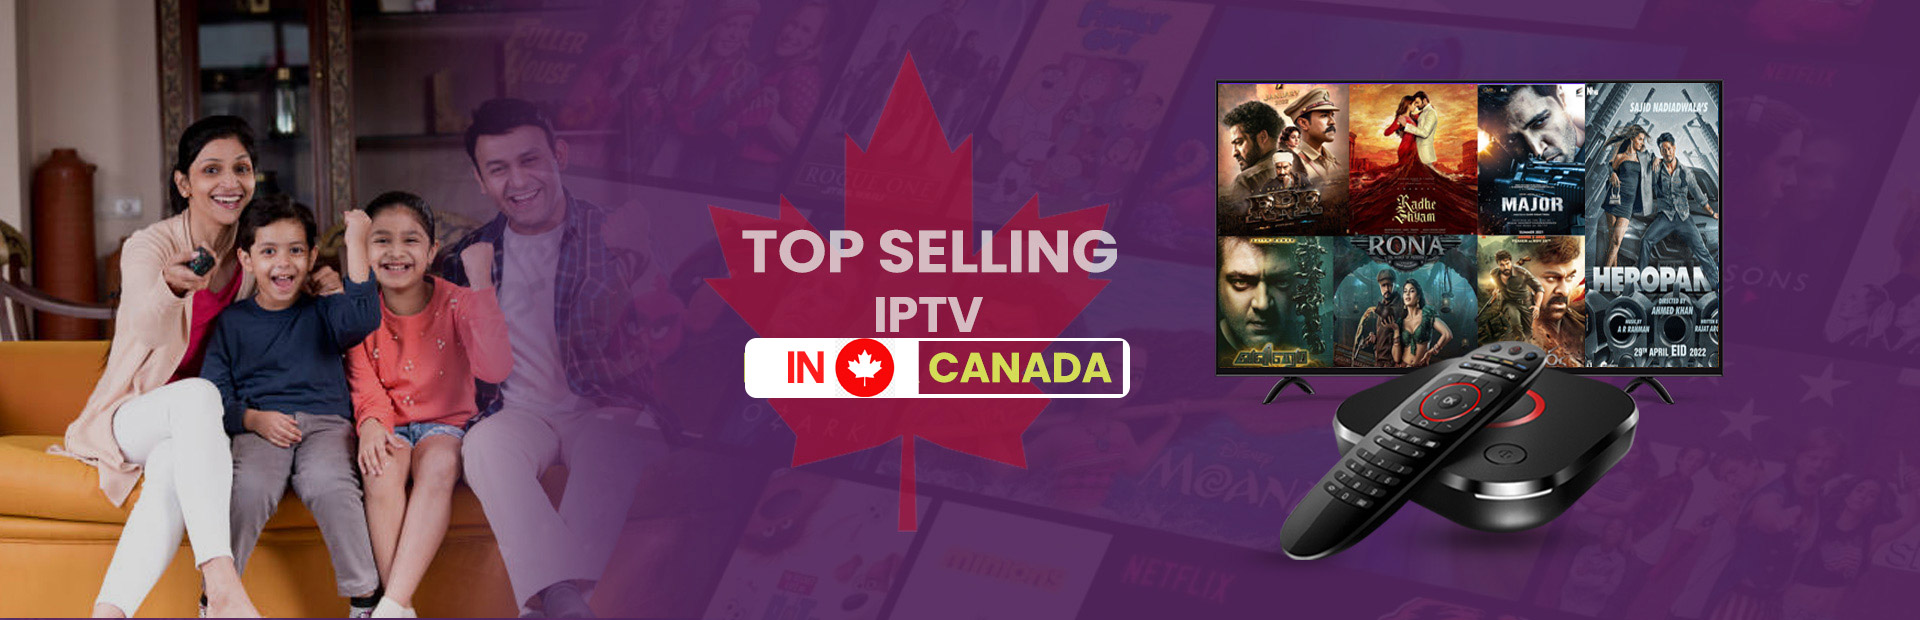 Top Selling IPTV in Canada